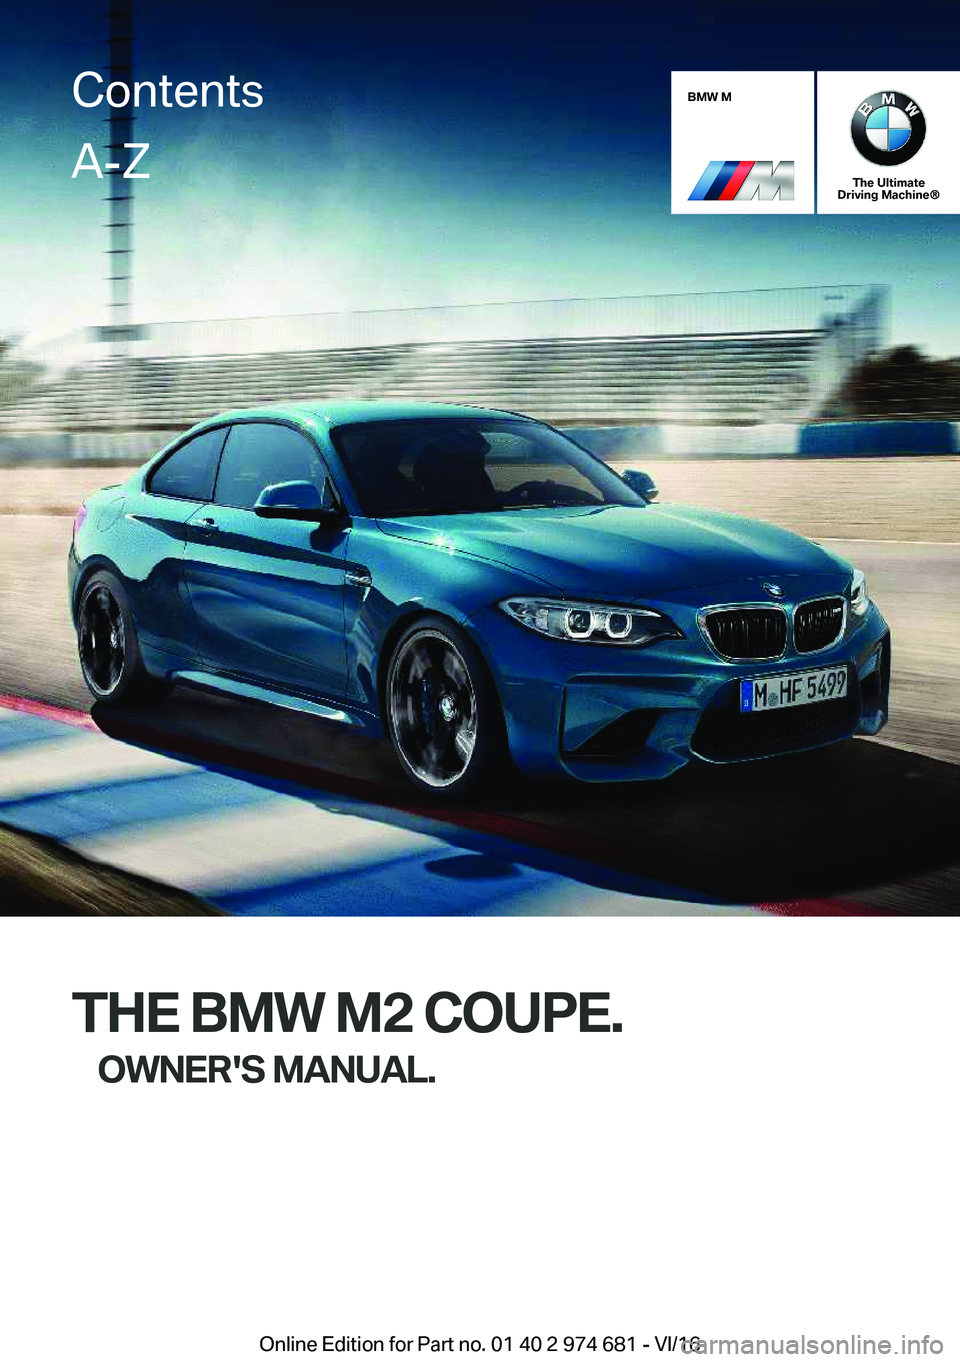 BMW M2 2017  Owners Manual �B�M�W��M
�T�h�e��U�l�t�i�m�a�t�e
�D�r�i�v�i�n�g��M�a�c�h�i�n�e�n
�T�H�E��B�M�W��M�2��C�O�U�P�E�.
�O�W�N�E�R�'�S��M�A�N�U�A�L�.
�C�o�n�t�e�n�t�s�A�-�Z
�O�n�l�i�n�e� �E�d�i�t�i�o�n� �f�o�r� 